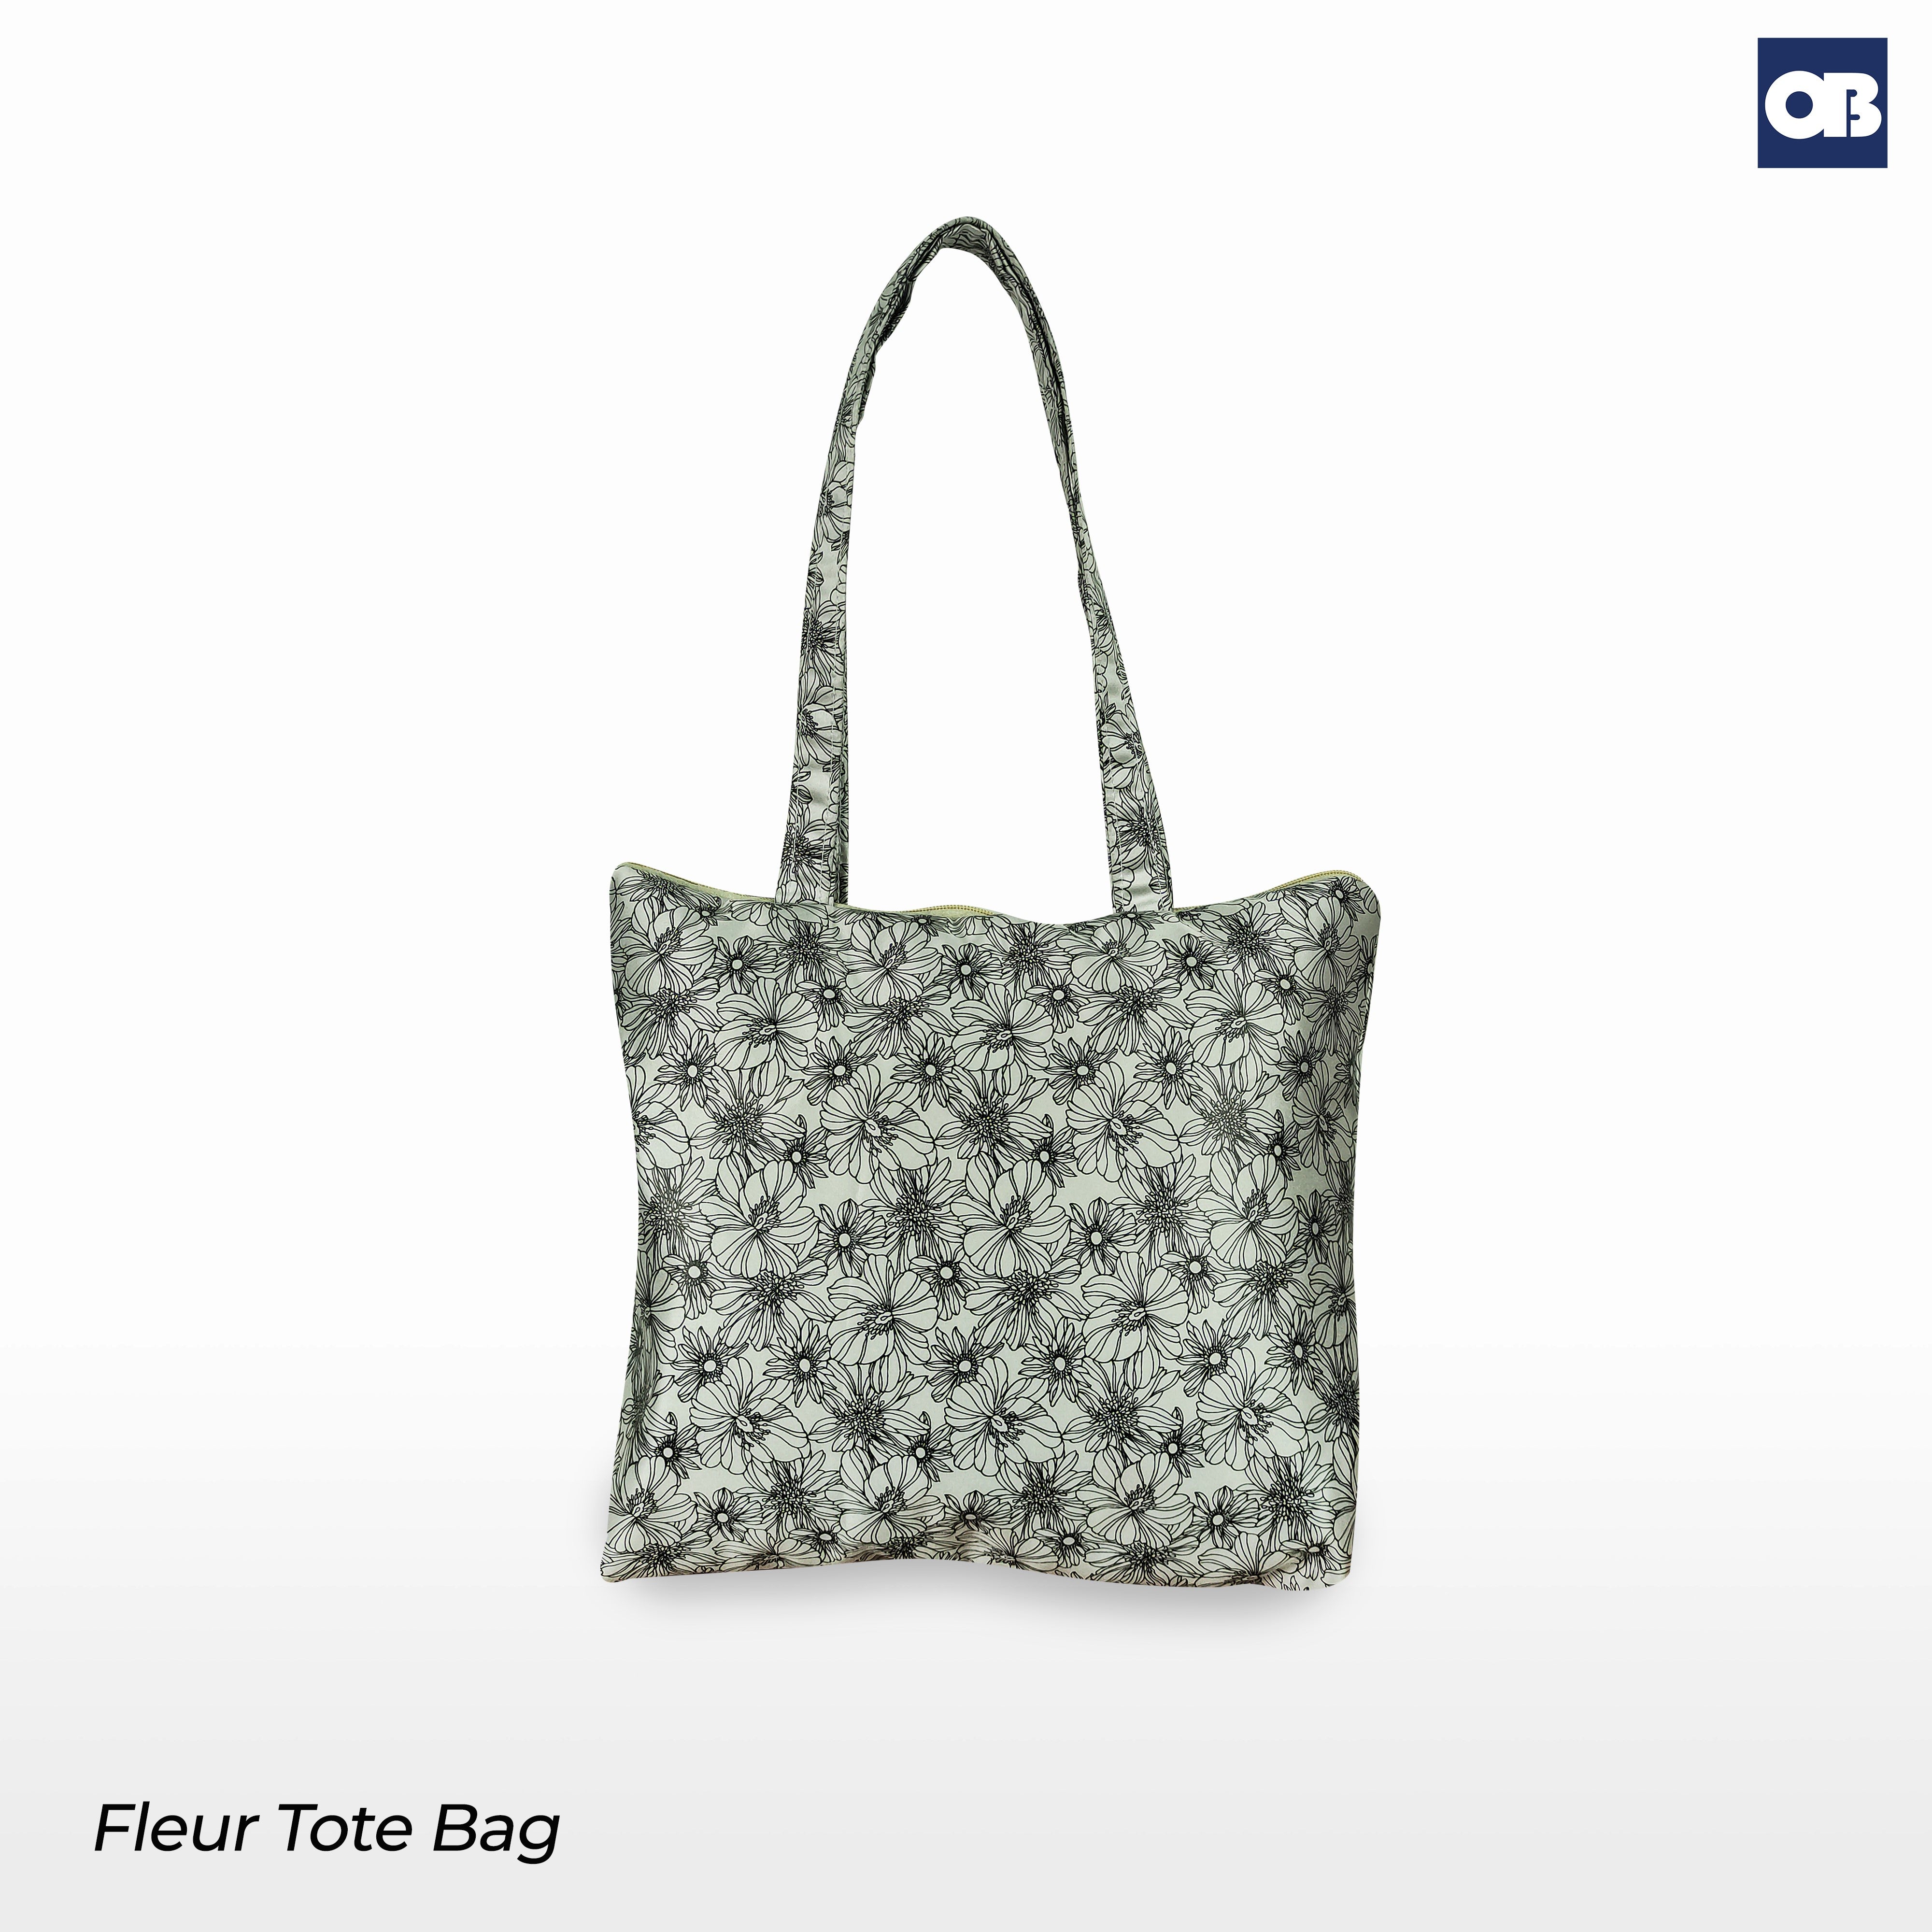 OB Fleur Tote Bag